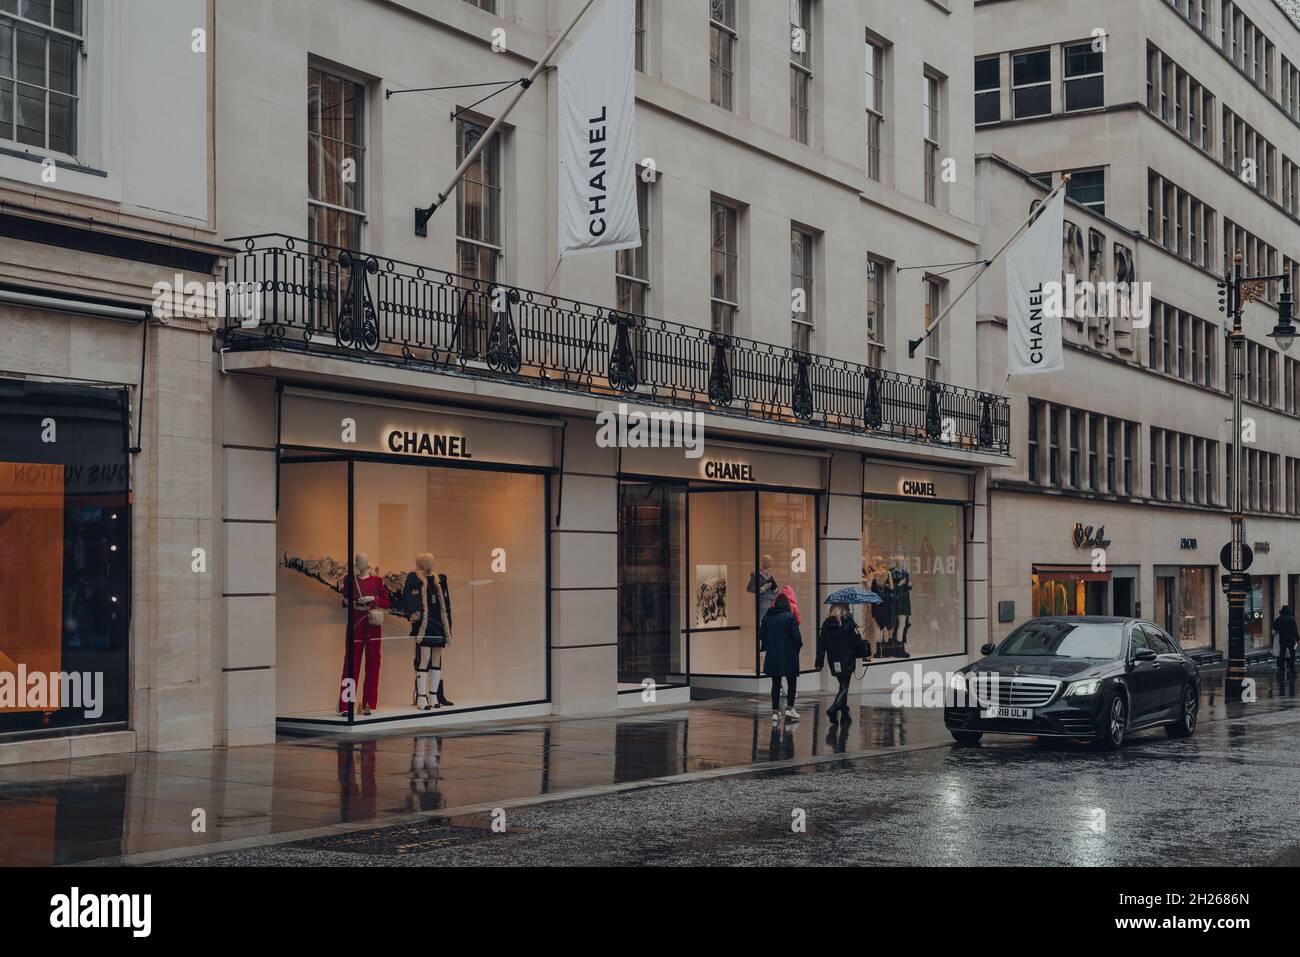 London, UK - October 02, 2021: Chanel store on New Bond Street